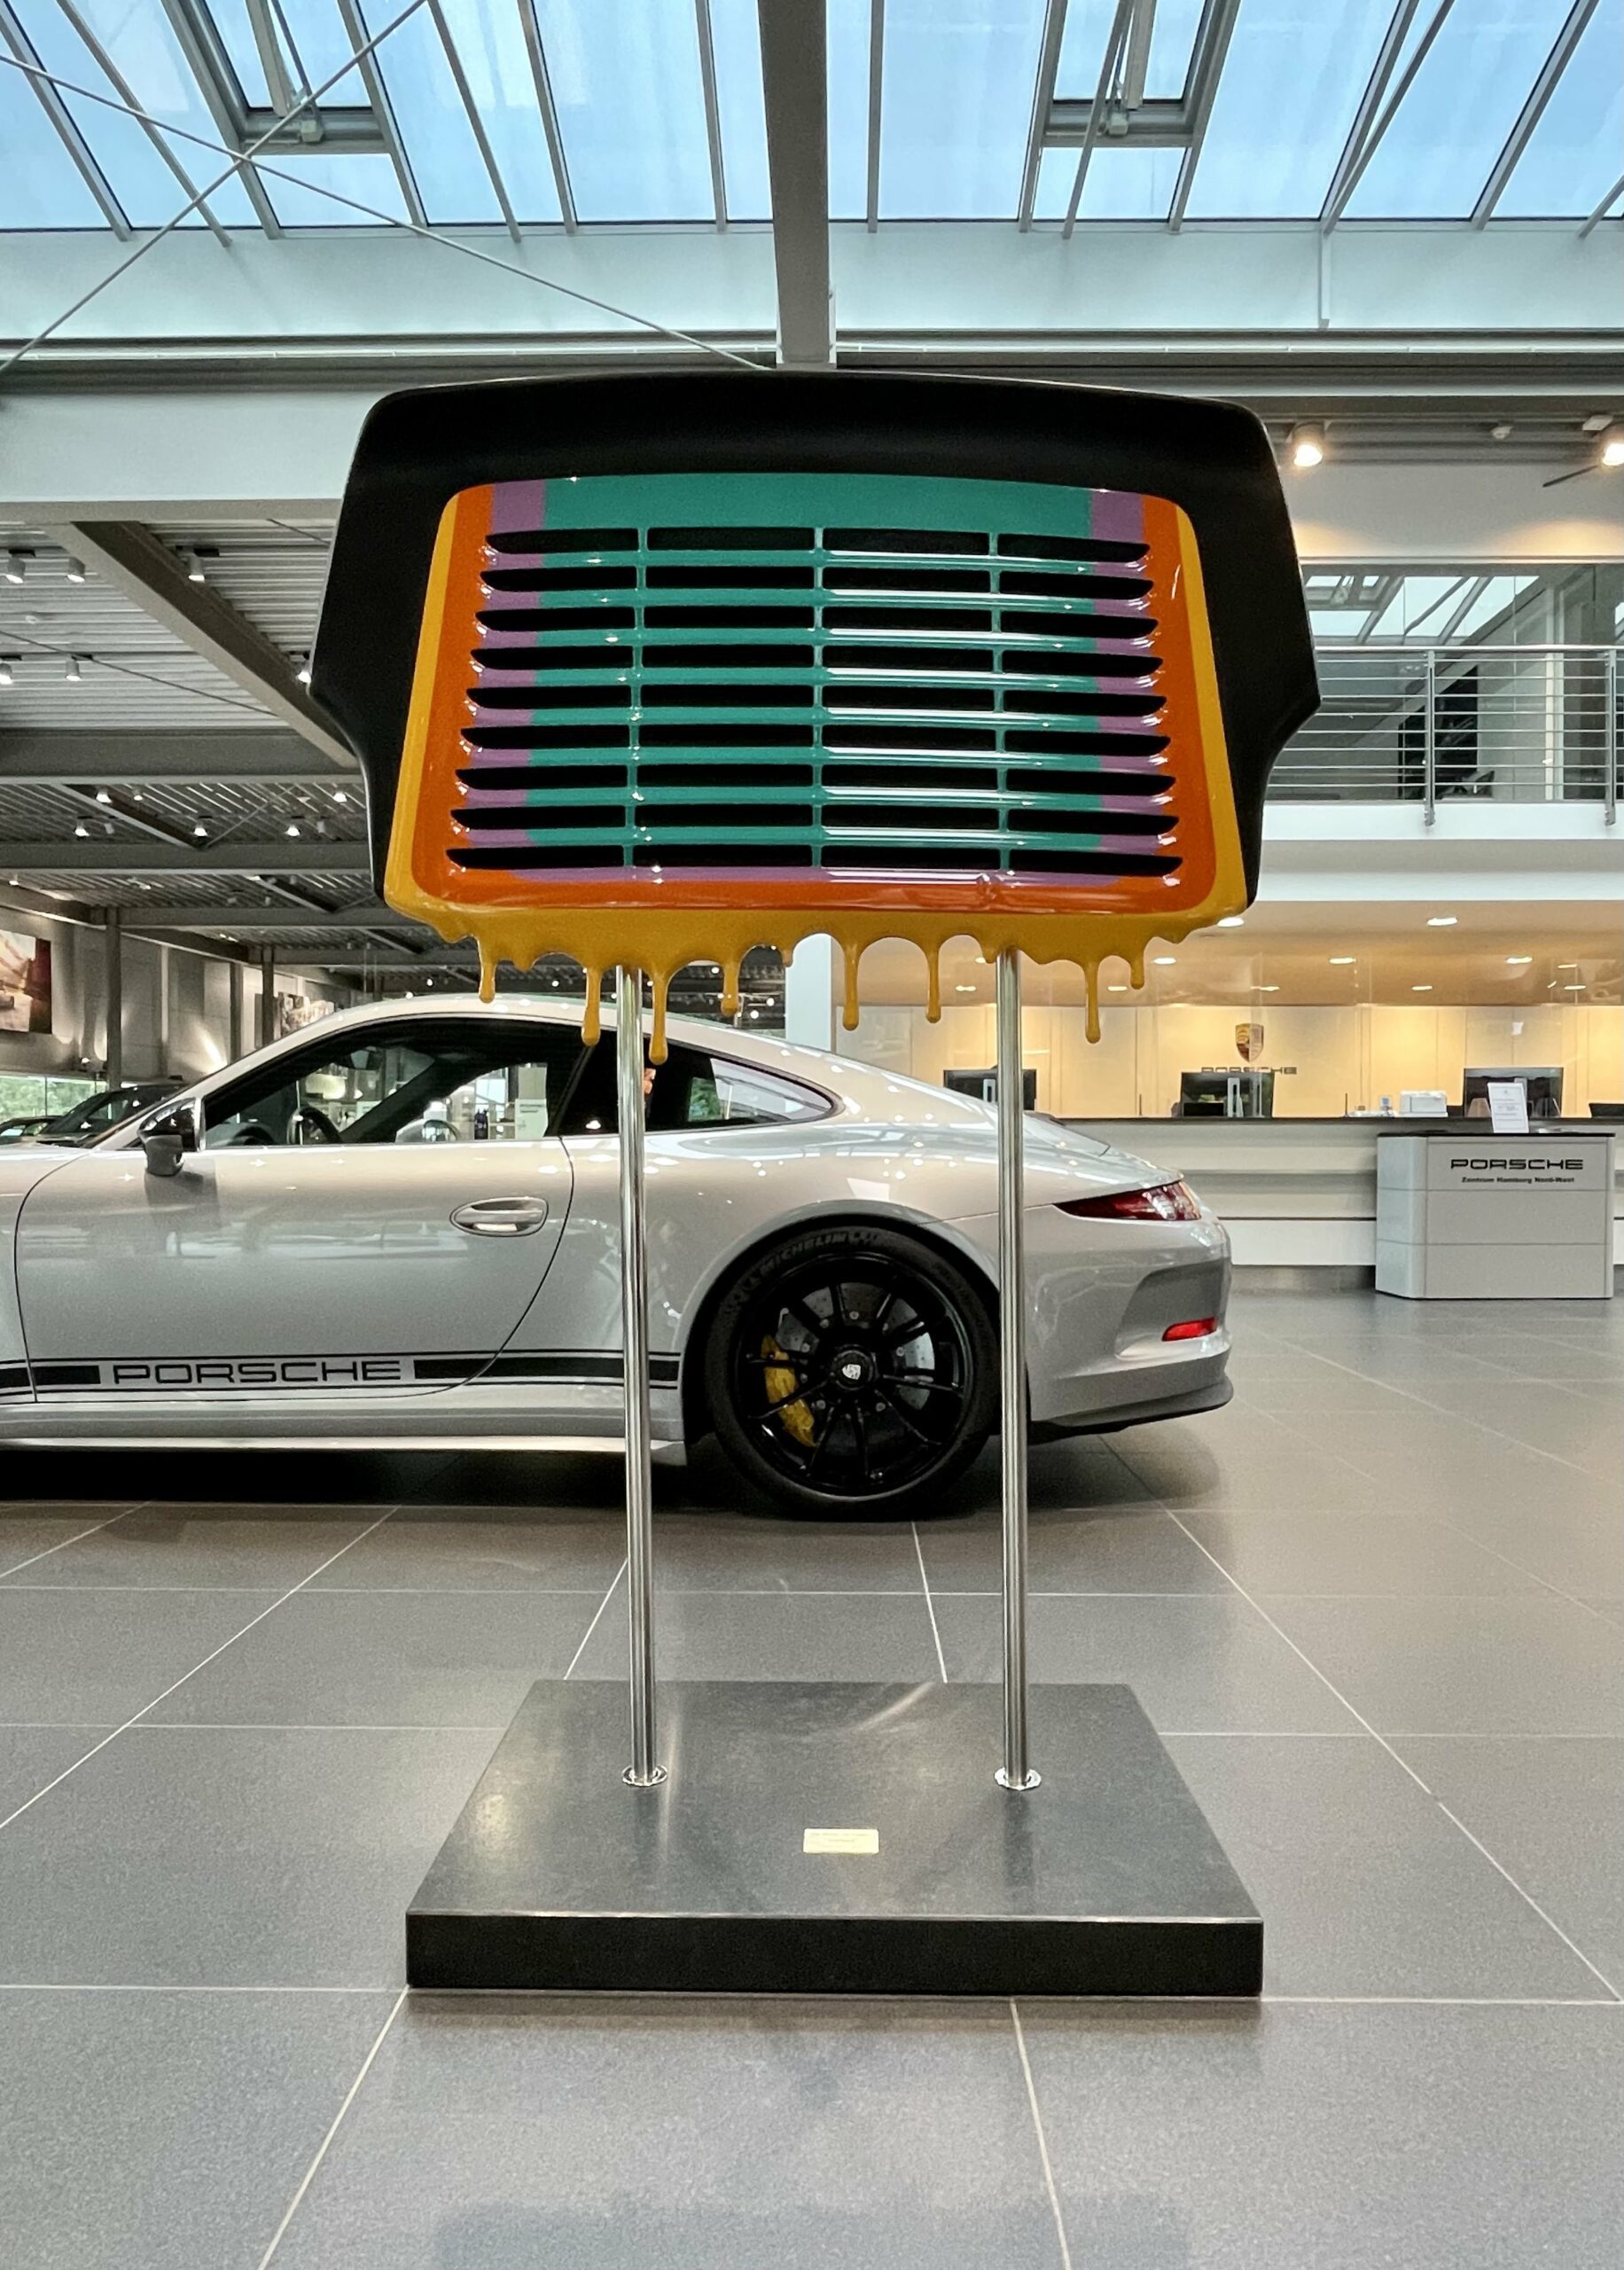 Porsche Hamburg